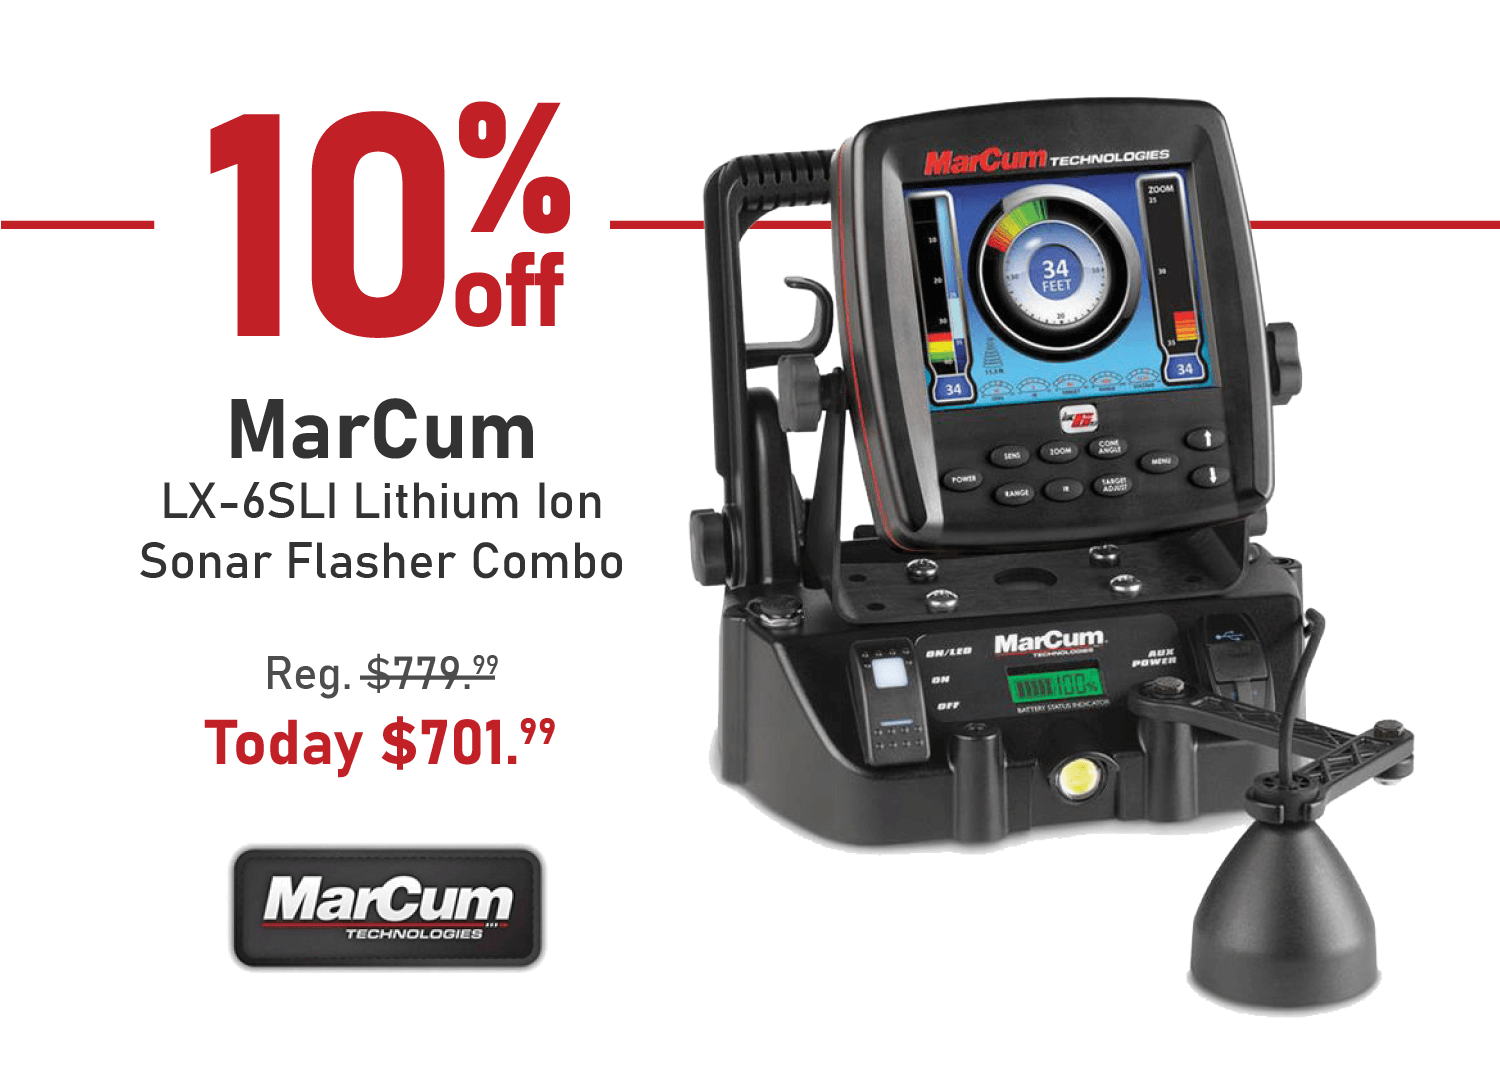 Save 10% on the MarCum LX-6SLI Lithium Ion Sonar Flasher Combo